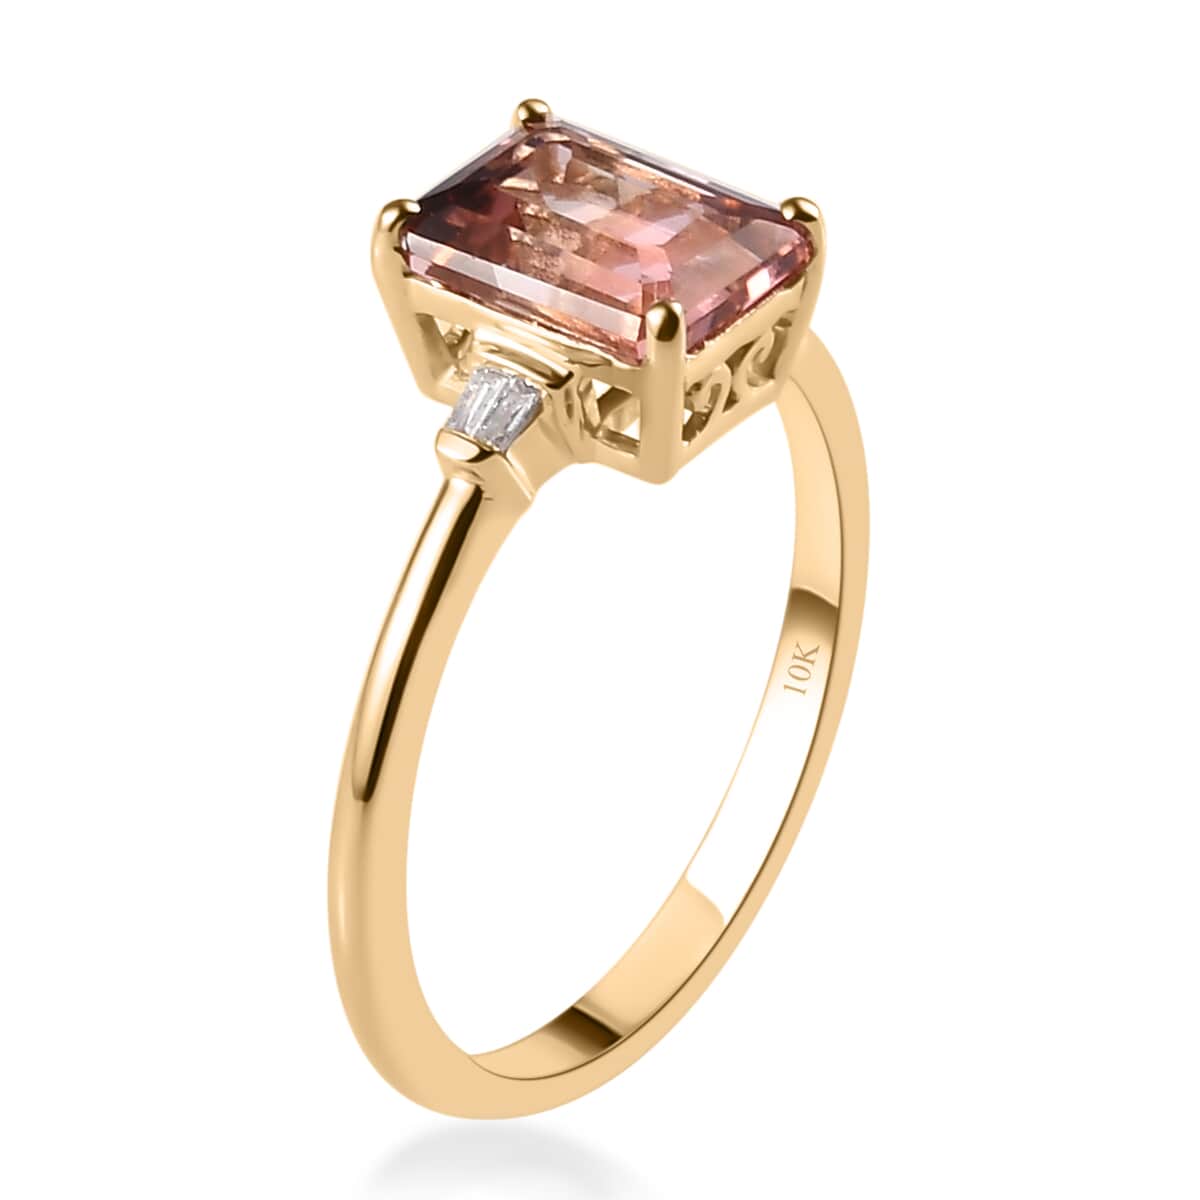 Luxoro 10K Rose Gold Premium Blush Tourmaline and Diamond Ring (Size 7.0) 1.85 ctw image number 3